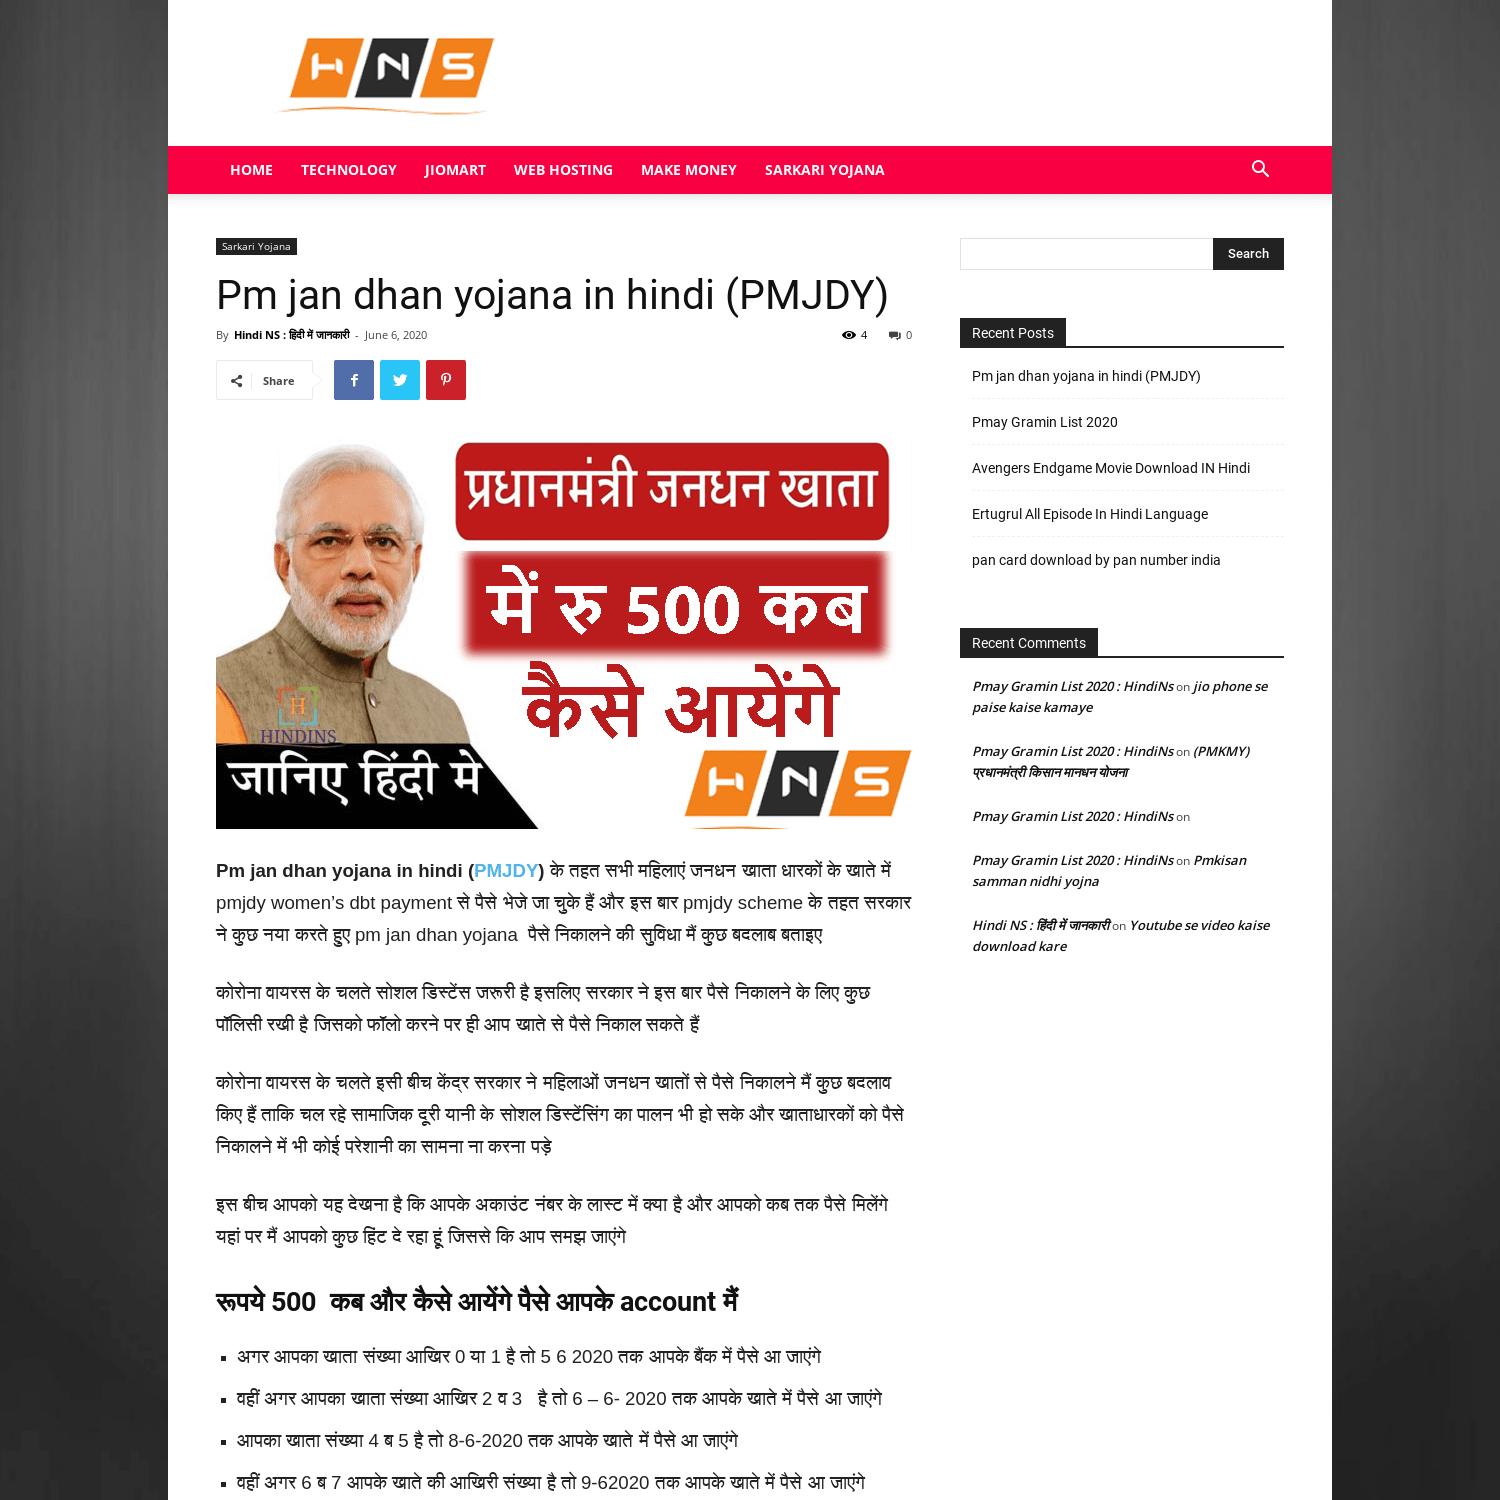 Pm jan dhan yojana in hindi (PMJDY)